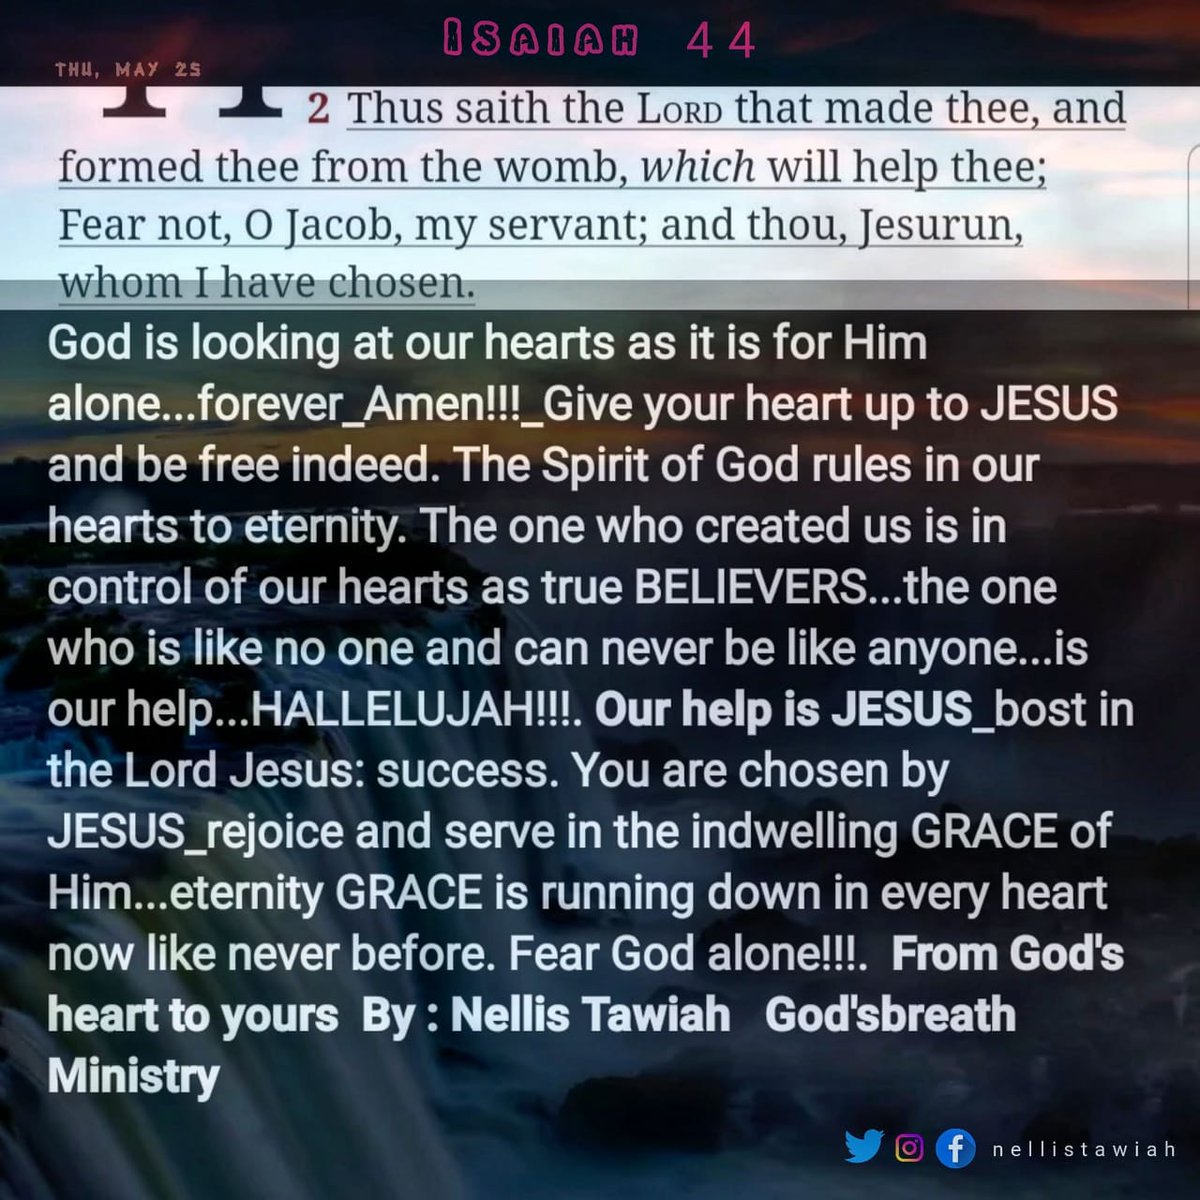 *Our help is JESUS!!!*

#scripture #scripturedaily #Twitter #newpost #ourhelpisJESUS